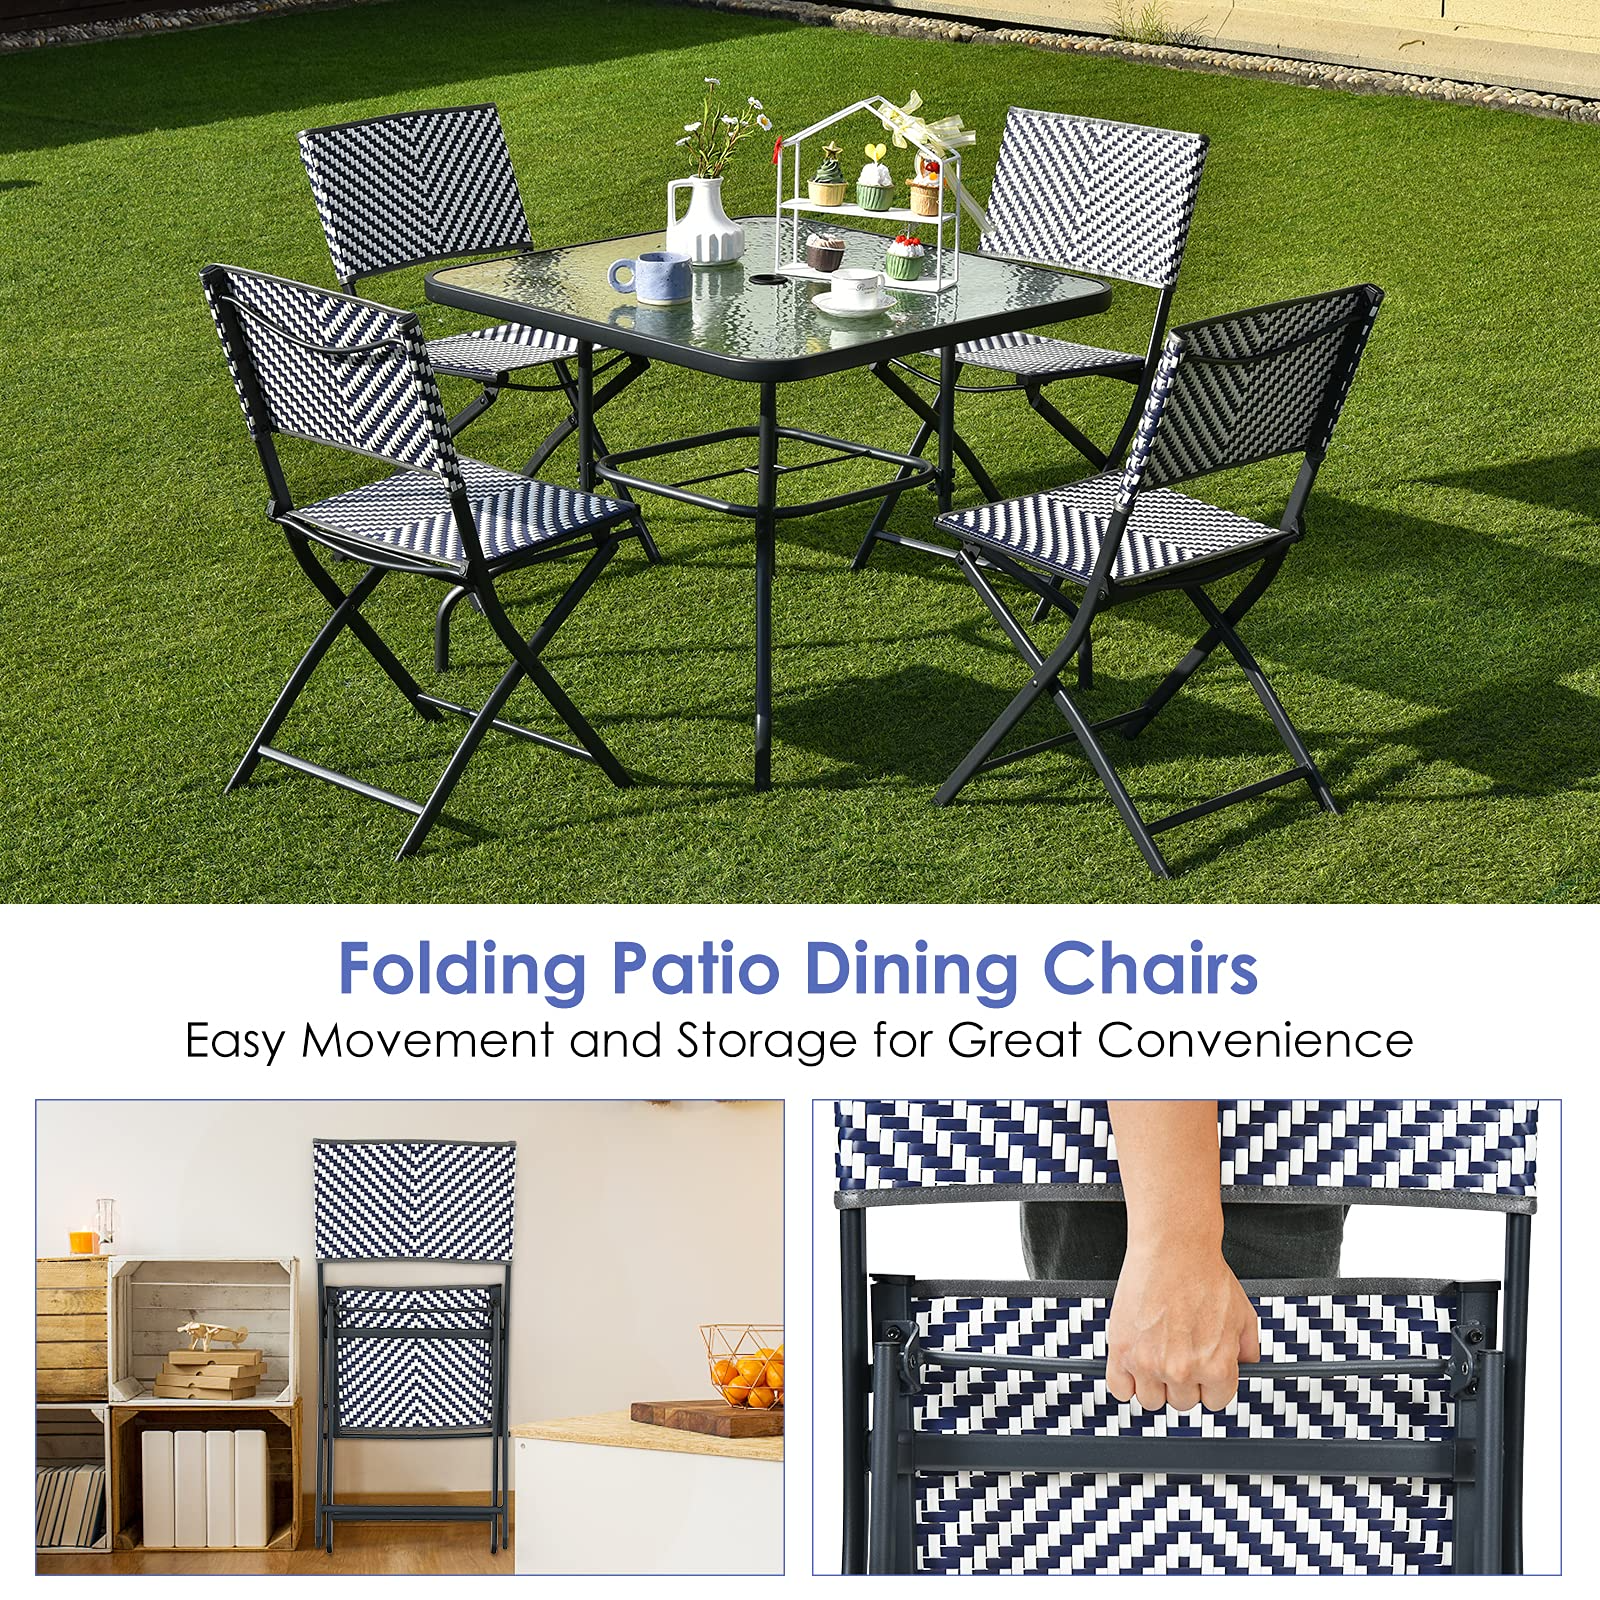 Giantex Set of 4 Patio Folding Chairs, PE Rattan Lawn Chairs